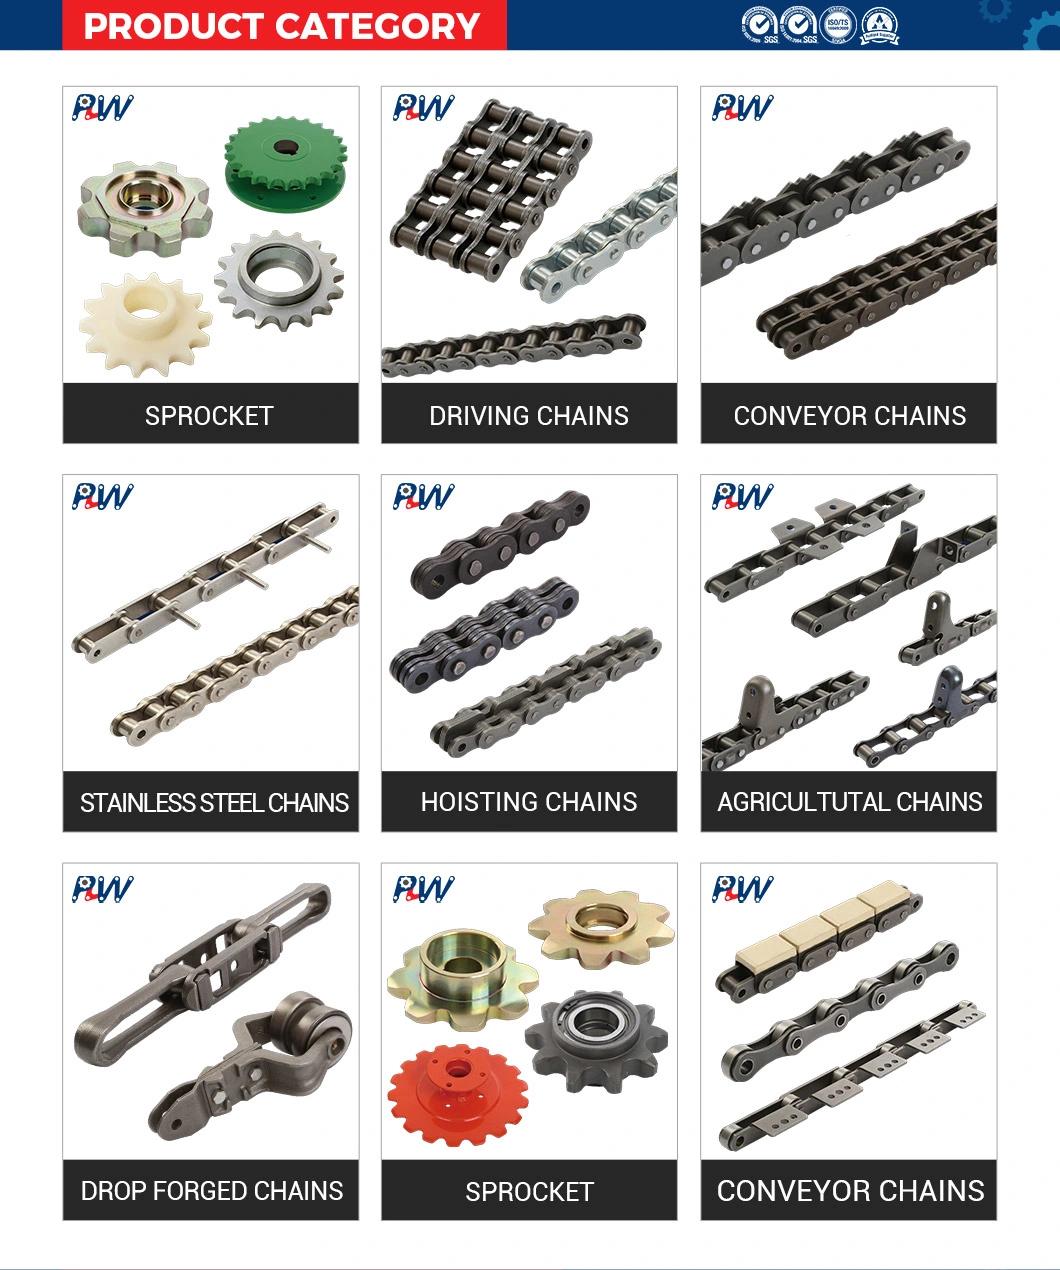 ANSI, DIN, Jins, ISO, Standard Made to Order Sprocket for Roller Chain